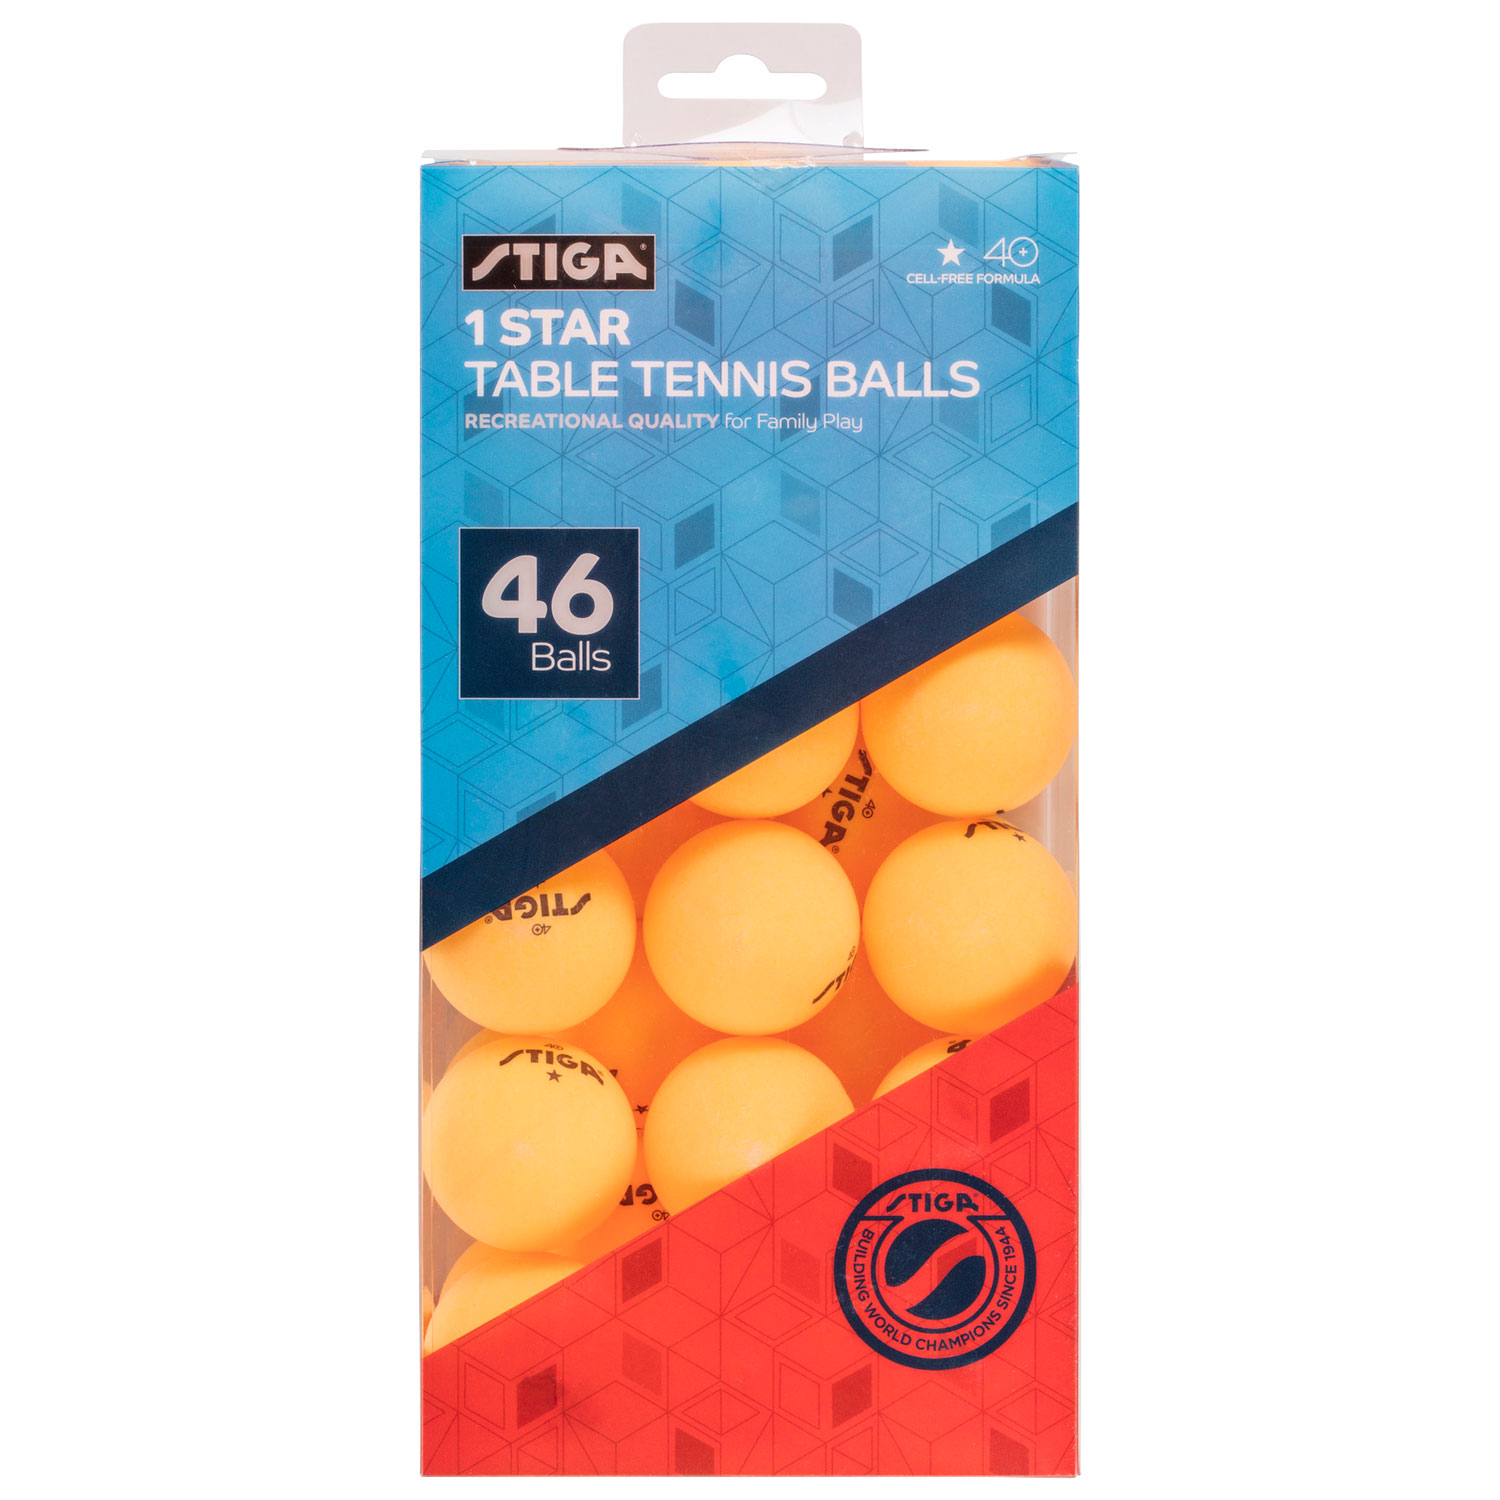 Stiga 1-Star Table Tennis Balls (T1461) - 46-Pack - Orange